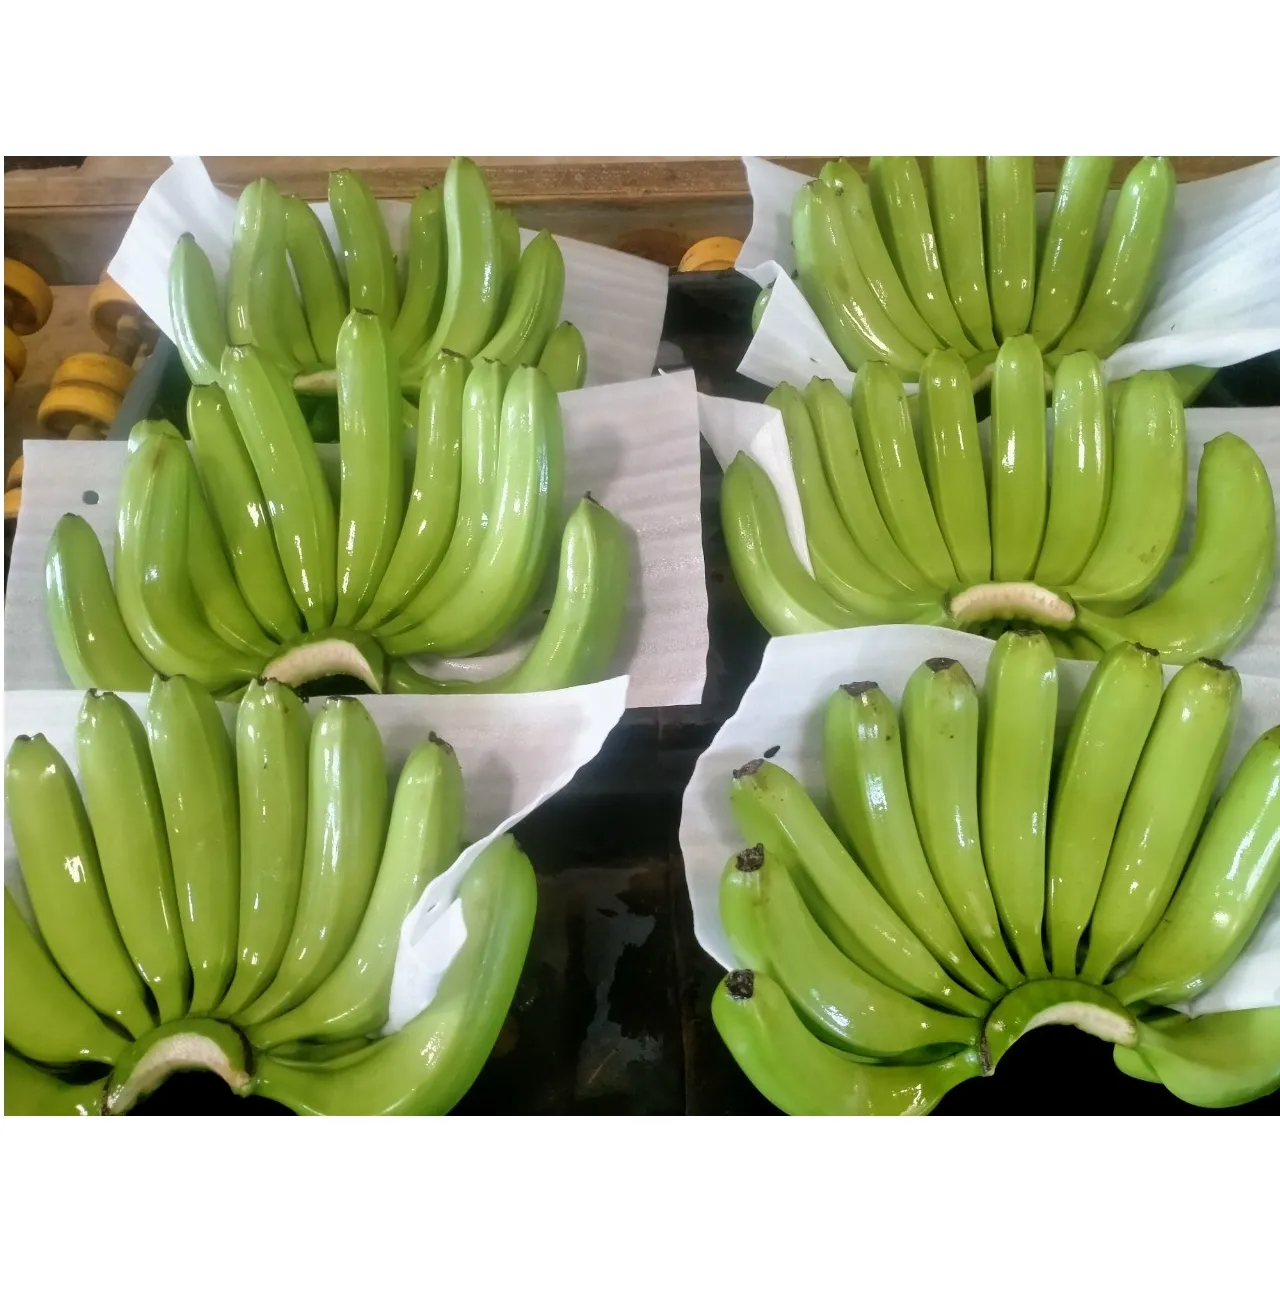 Export Fruits Cavendish Banana 100% Organic Fresh Banana made in Viet Nam Wholesale Newest crop Natural sweet taste